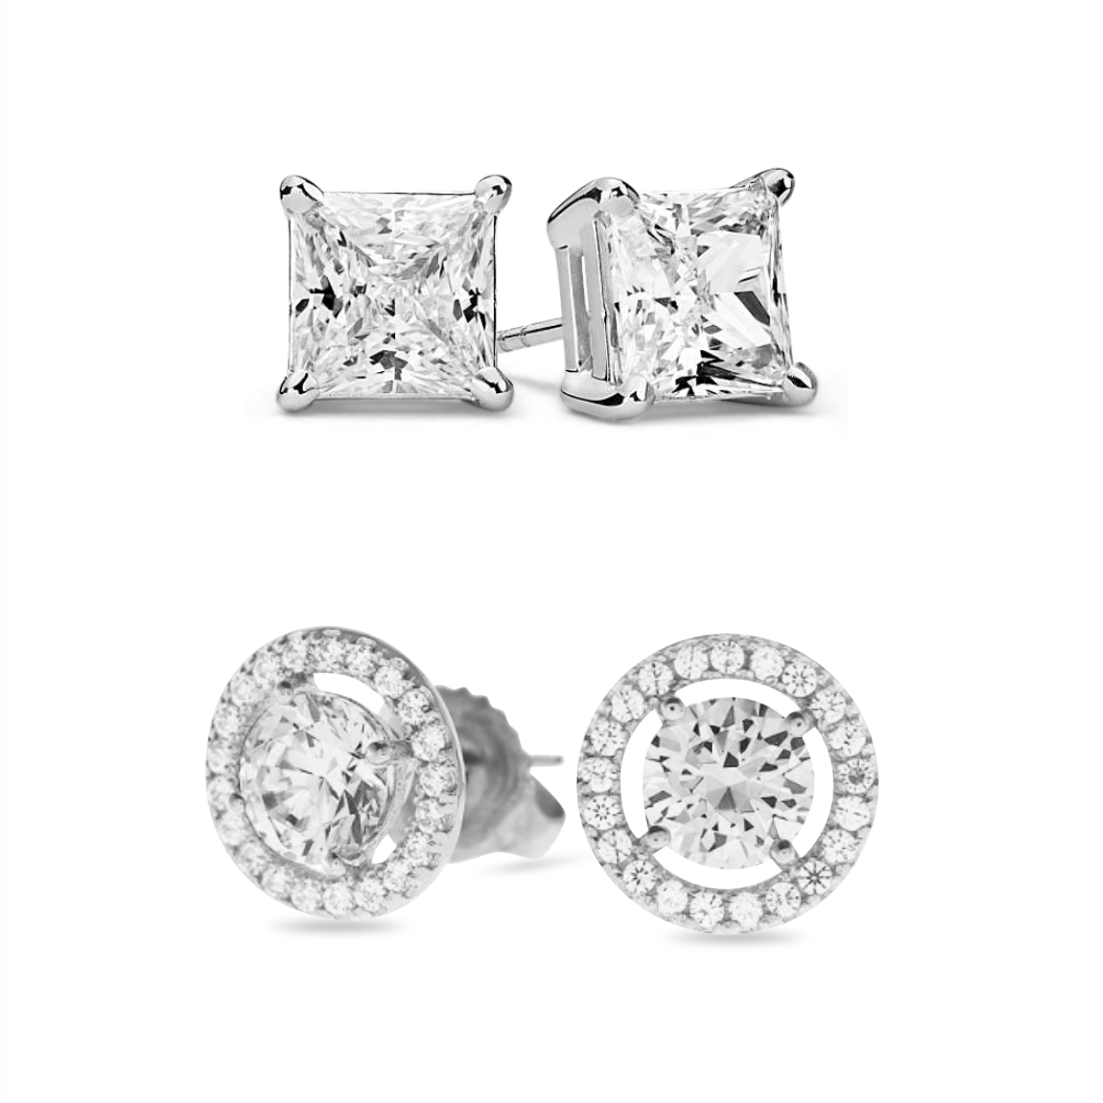 [PROMO SET] Celeste Lilith Earrings Diamond Set